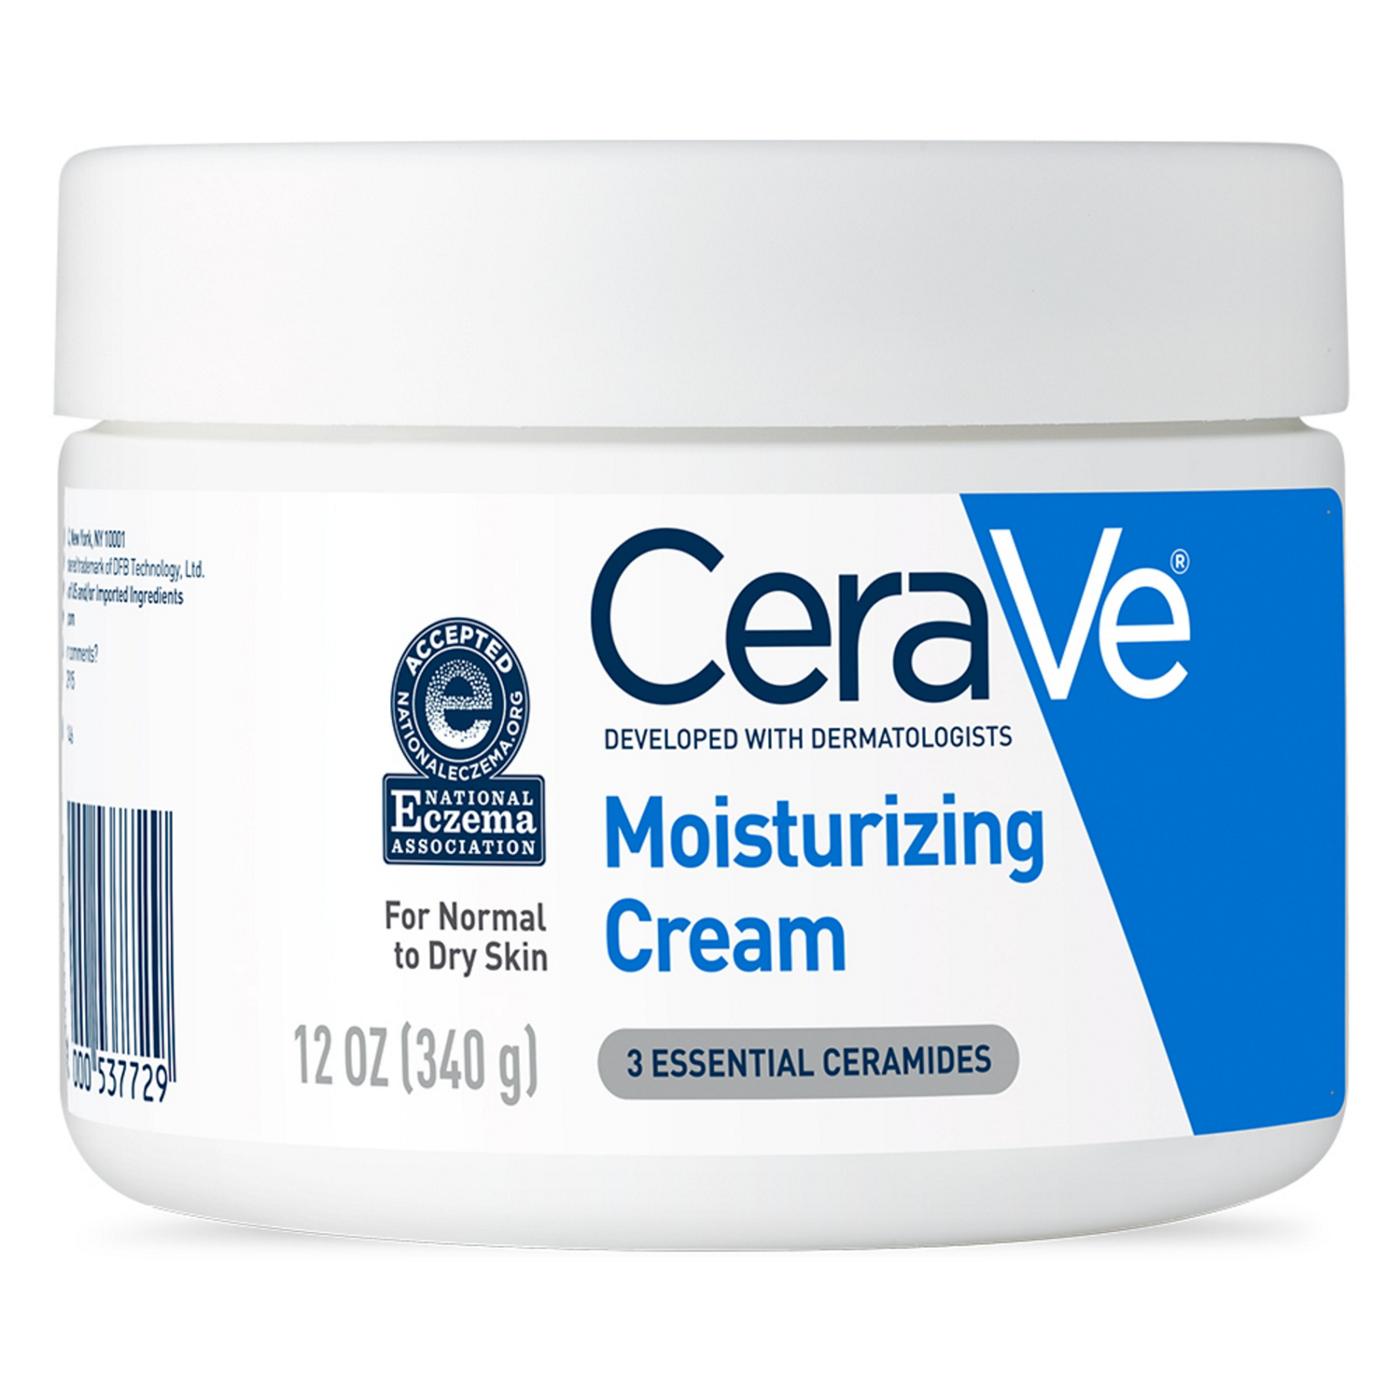 CeraVe Moisturizing Cream; image 1 of 2